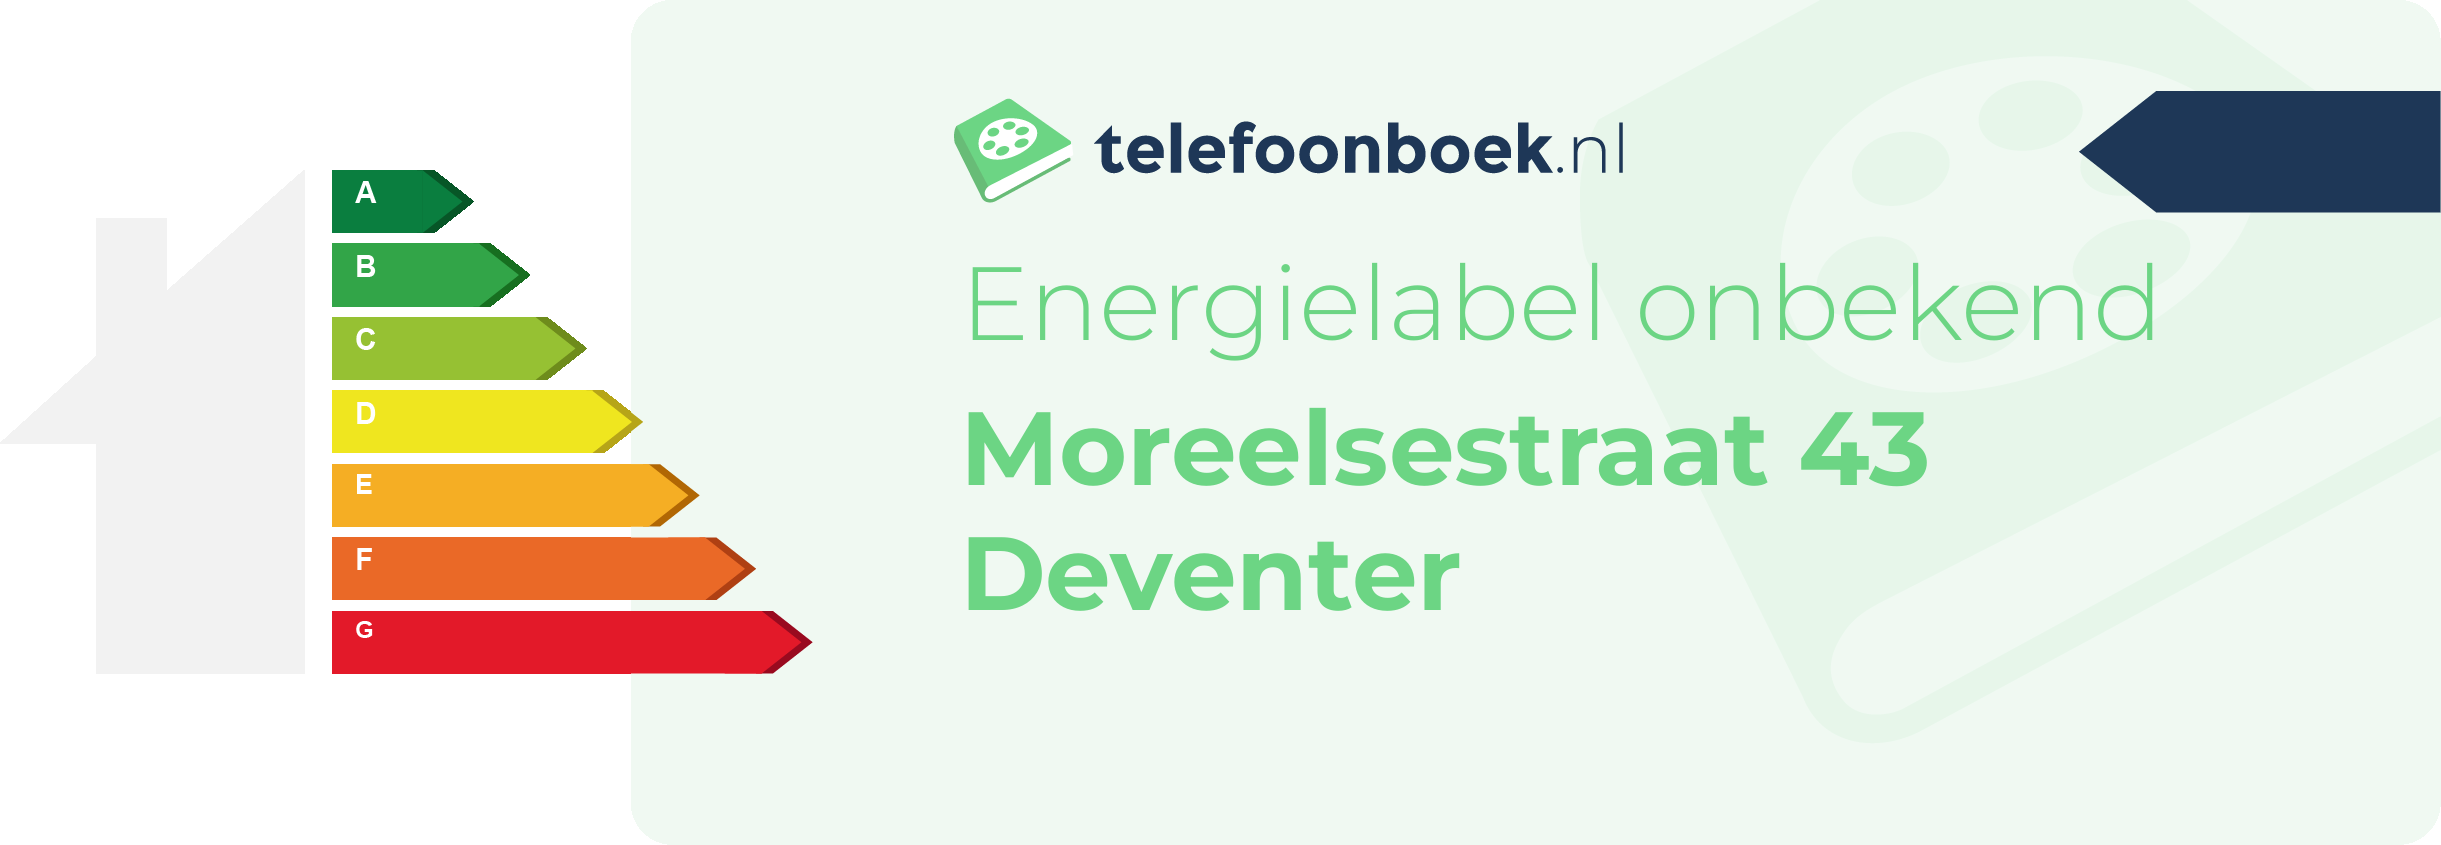 Energielabel Moreelsestraat 43 Deventer